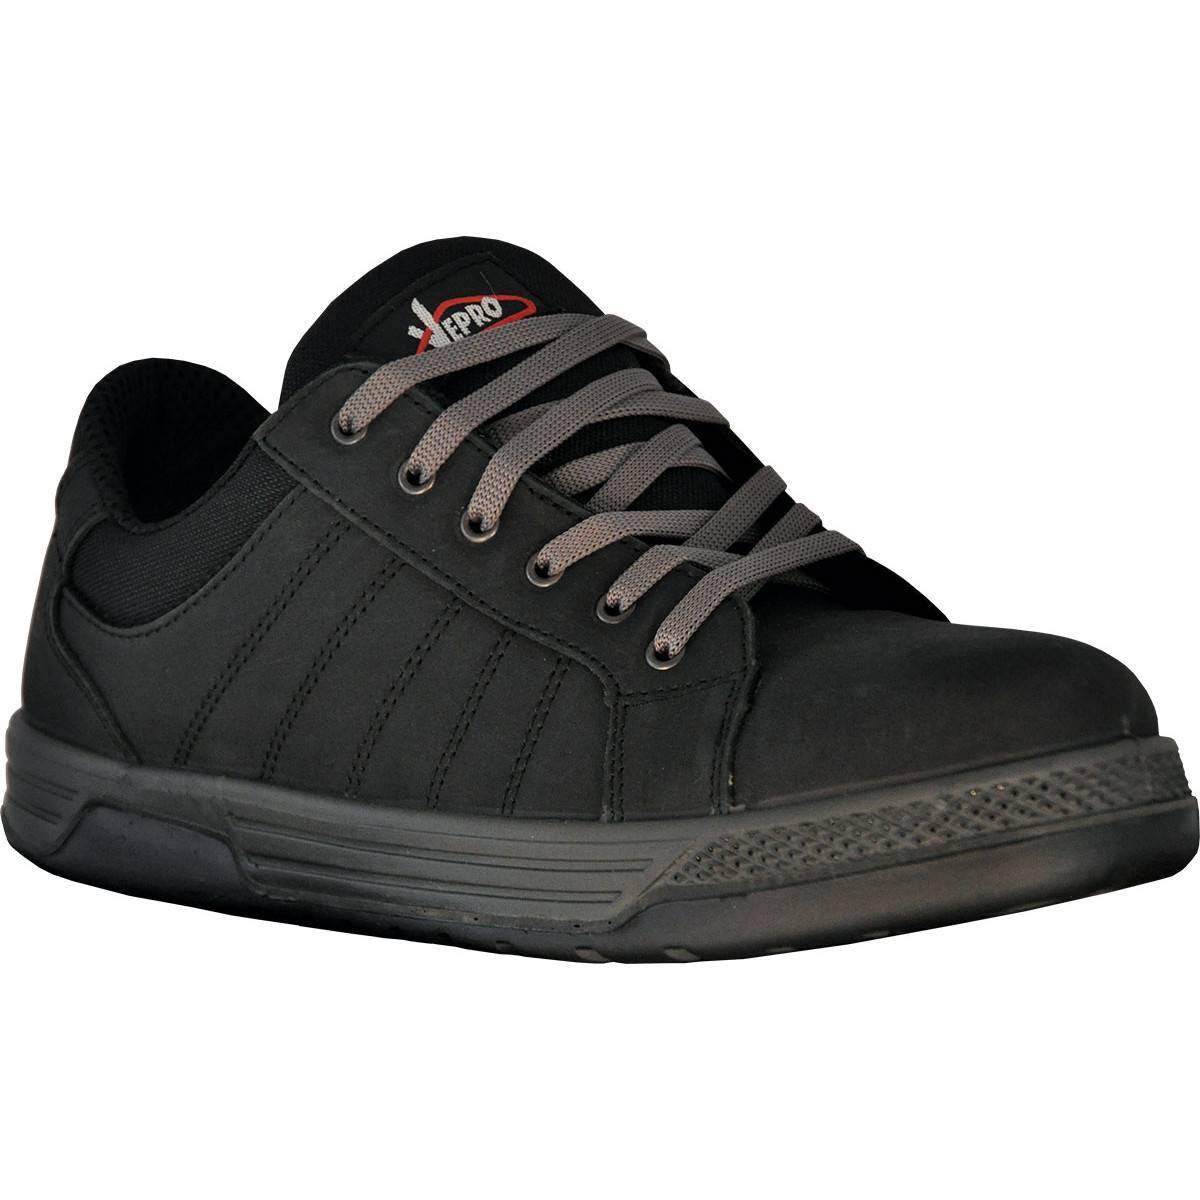 MANIBASSE low safety shoes size 45, black nubuck leather